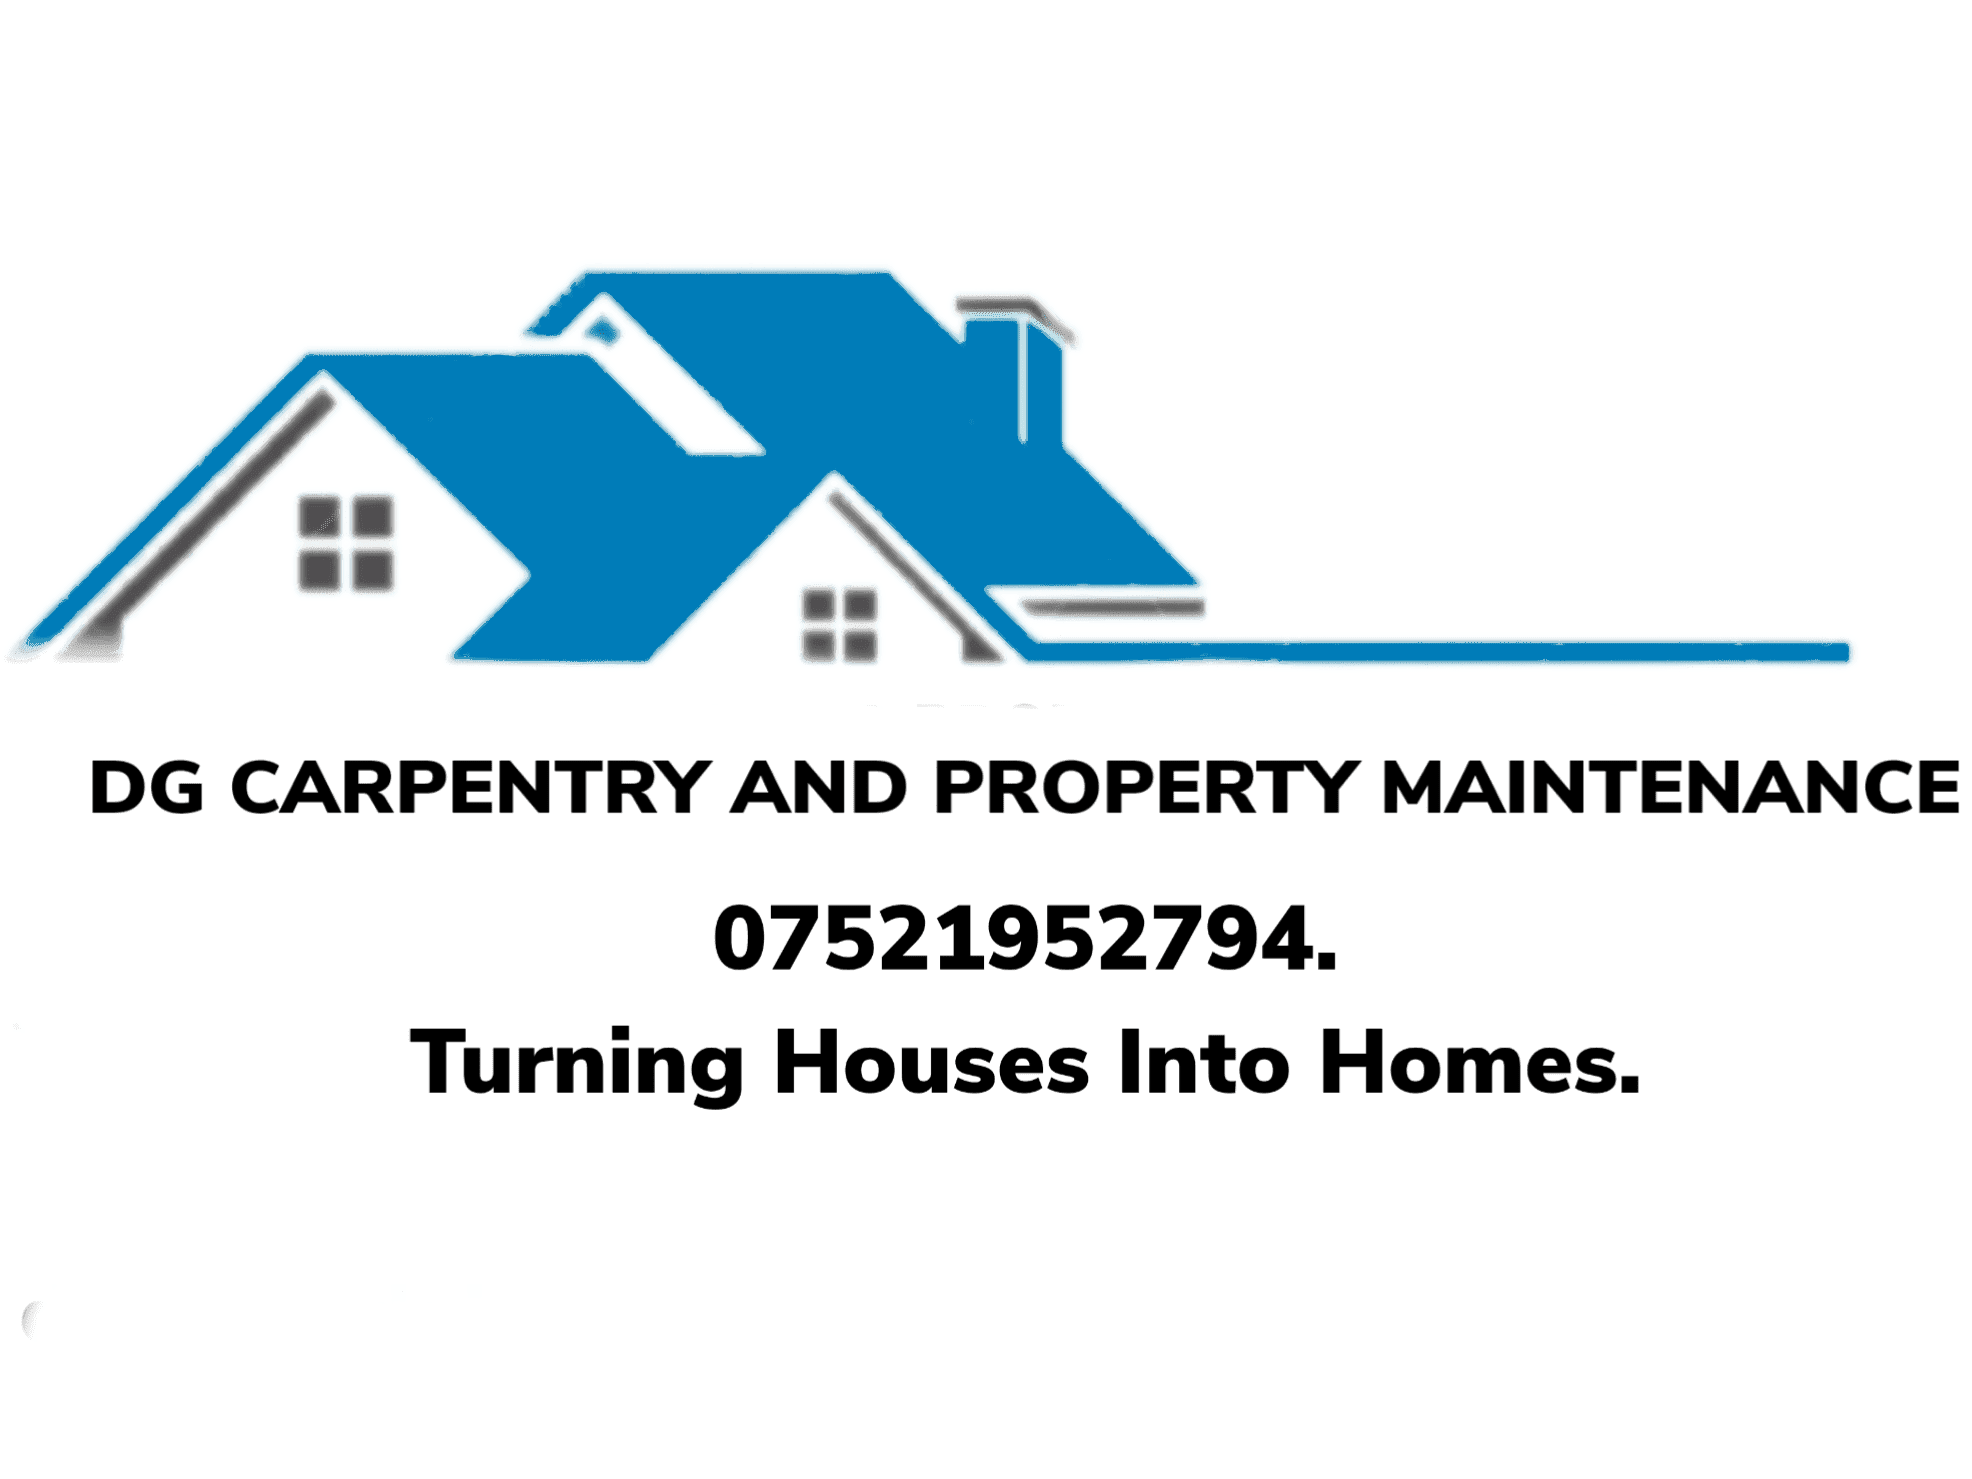 DG Carpentry and Property Maintenance Ltd.